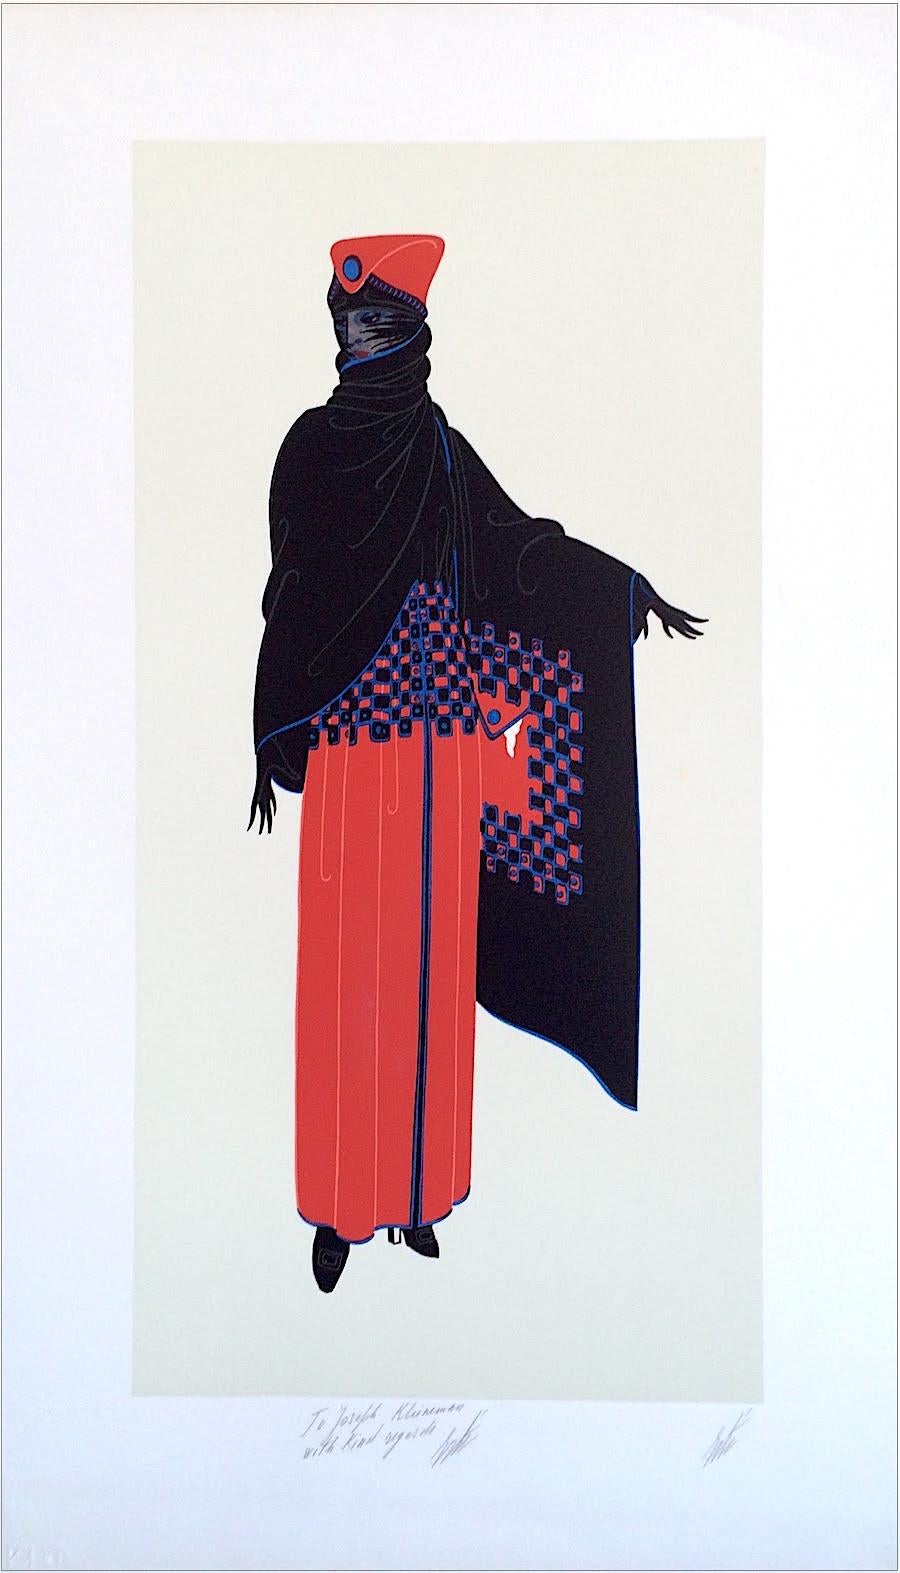 ZSA ZSA Signed Lithograph, 1920's Fashion Illustration, Art Deco, Black Cape - Print by Erté